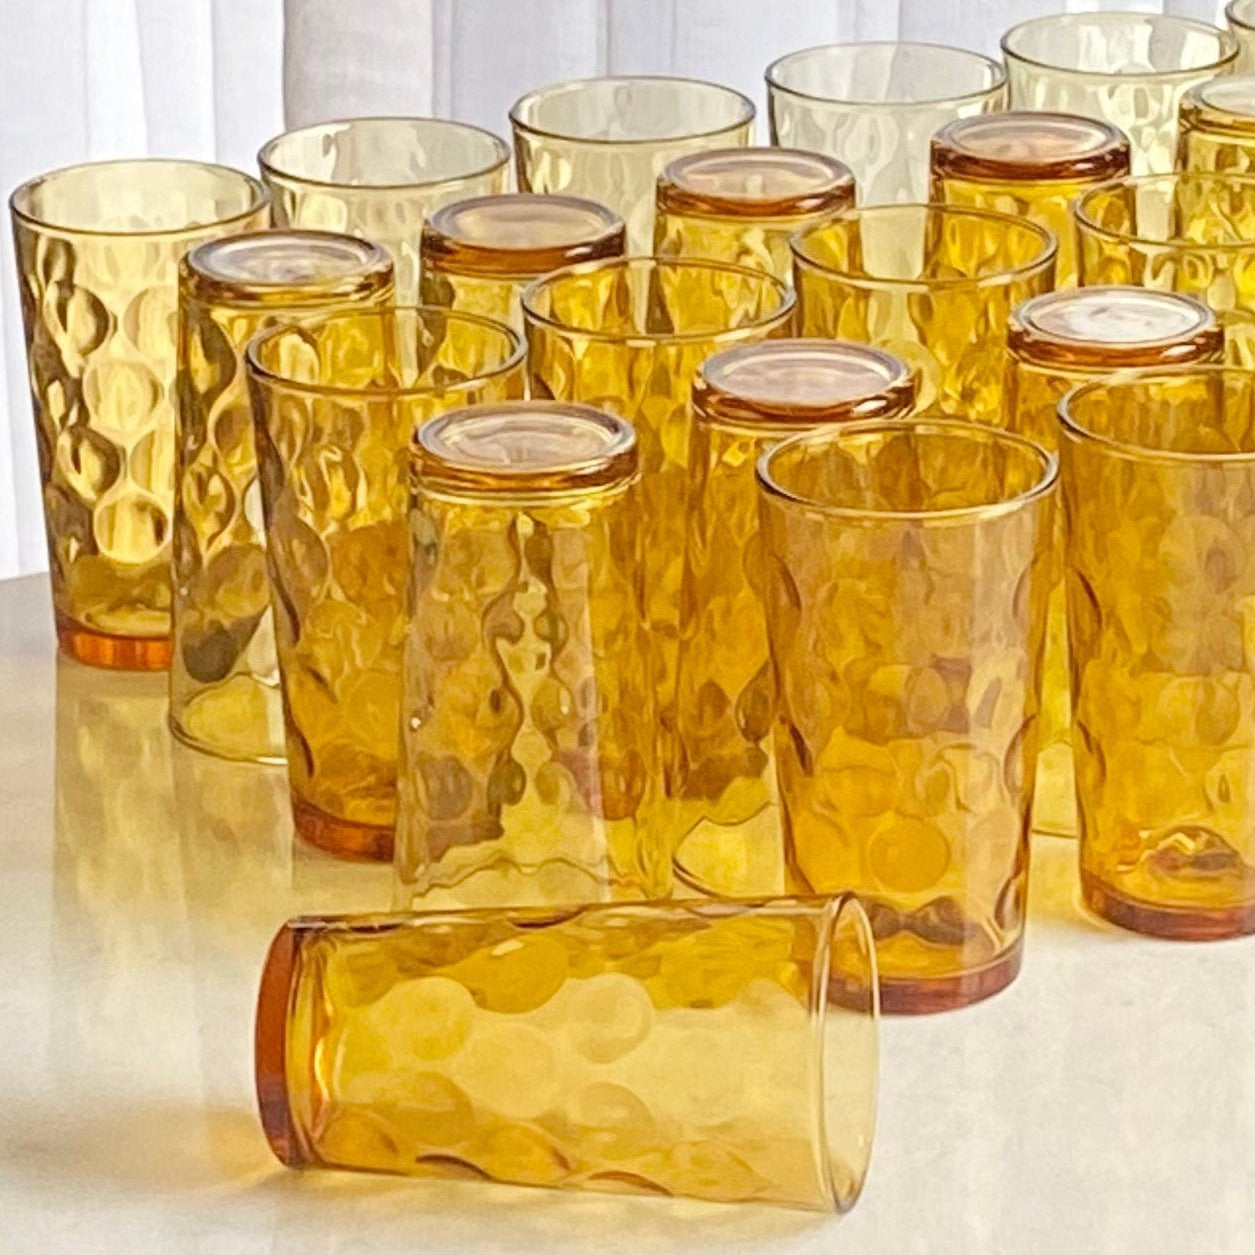 Vintage Hazel Atlas Continental Can Company Honey Gold Eldorado Glasses (circa 1956 - 1964) - 30 Available